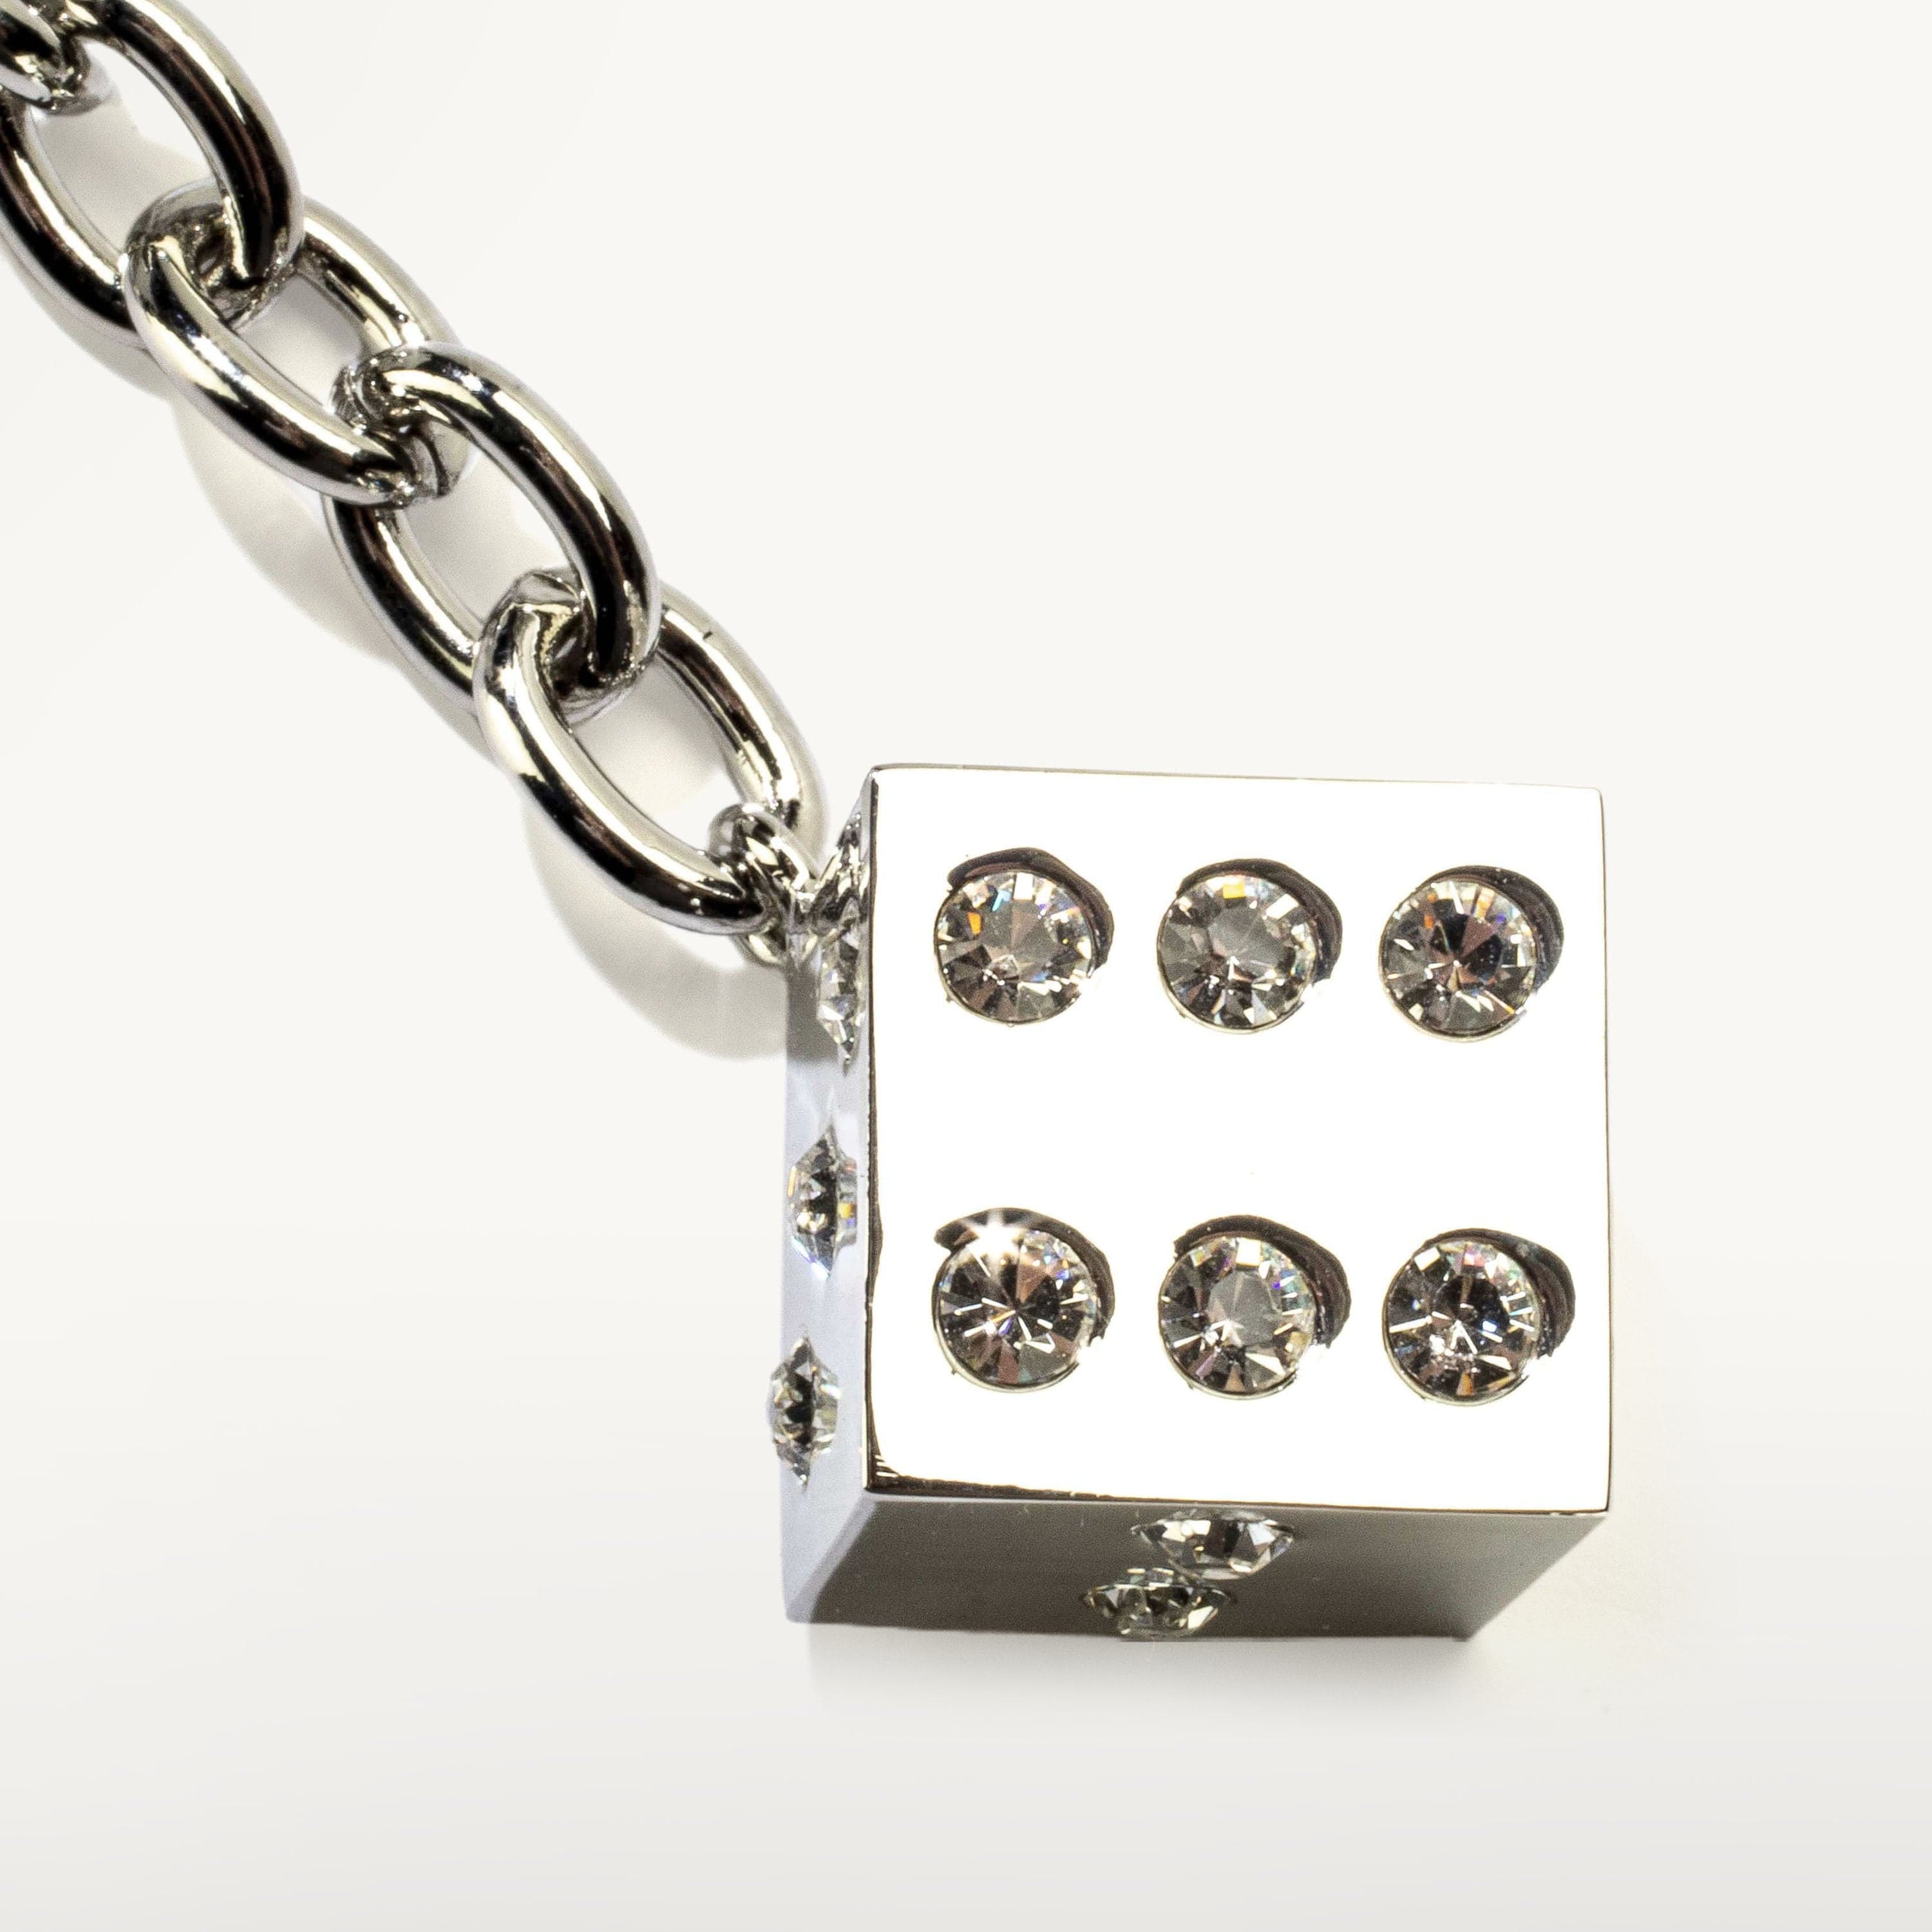 Kalifano Crystal Keychains Dice Keychain made with Swarovski Crystals SKC-062